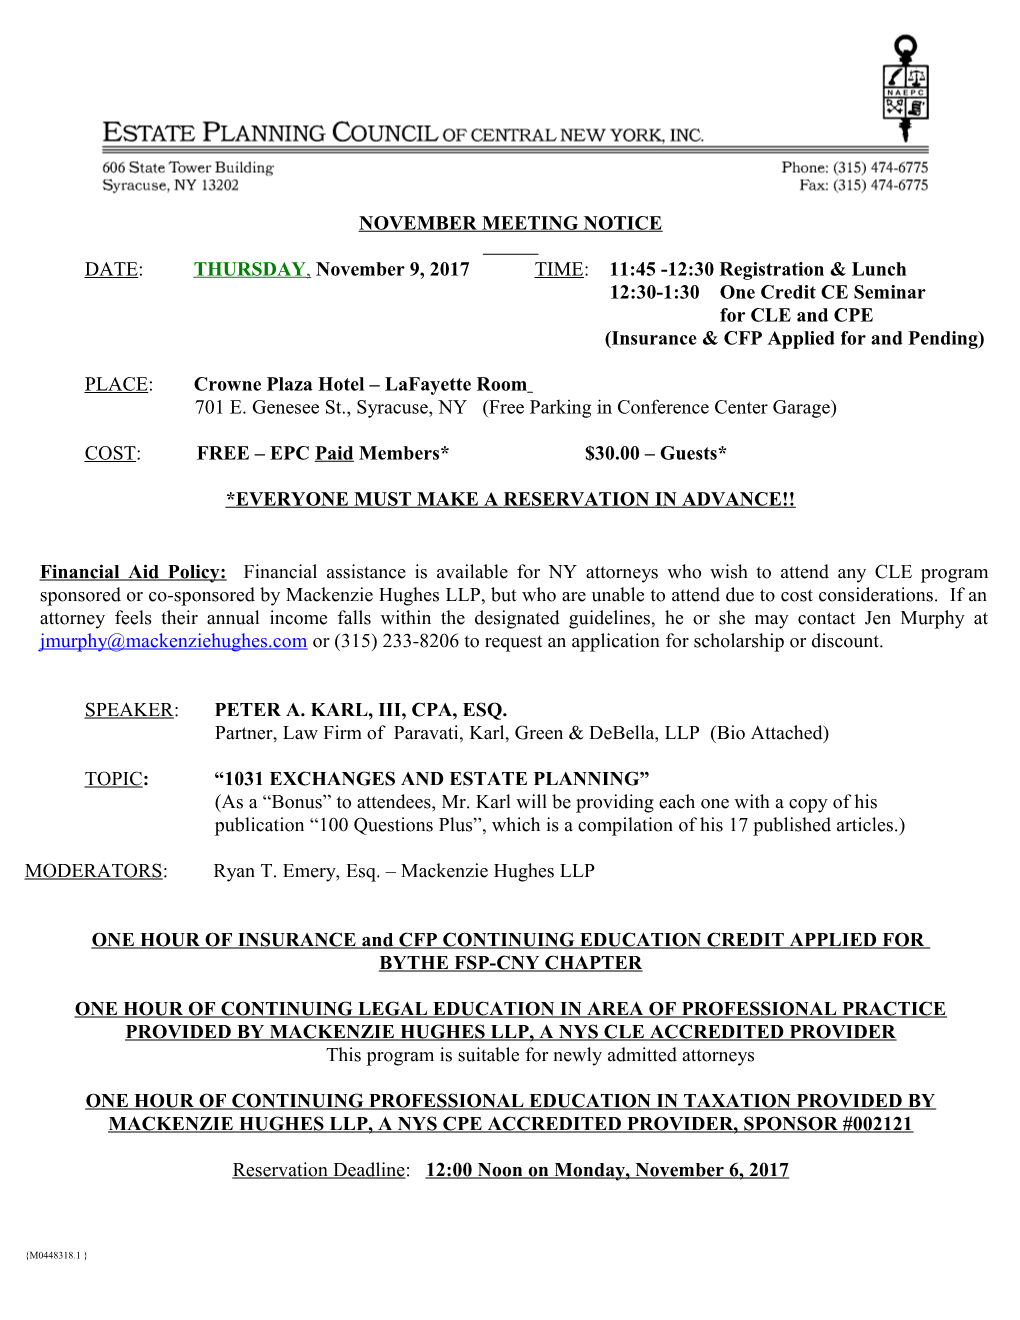 EPC December Meeting Notice-Revised (M0448318)